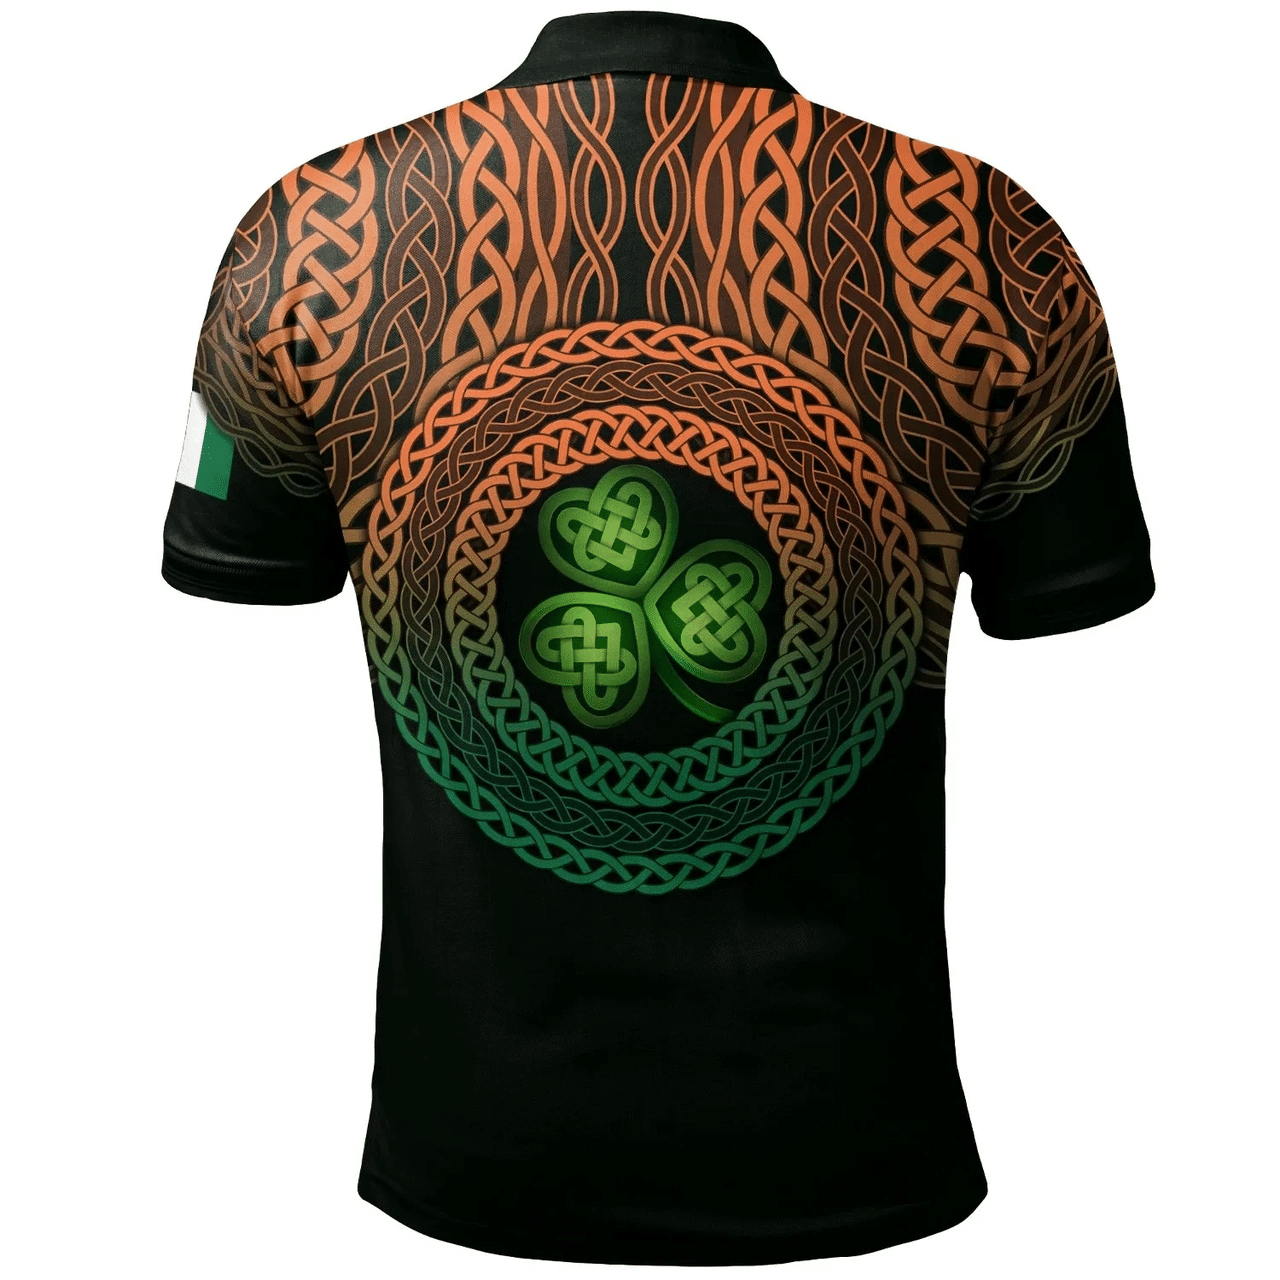 1stIreland Ireland Polo Shirt - Spillane or O'Spillane Irish Family Crest Polo Shirt - Celtic Pride A7 | 1stIreland.com